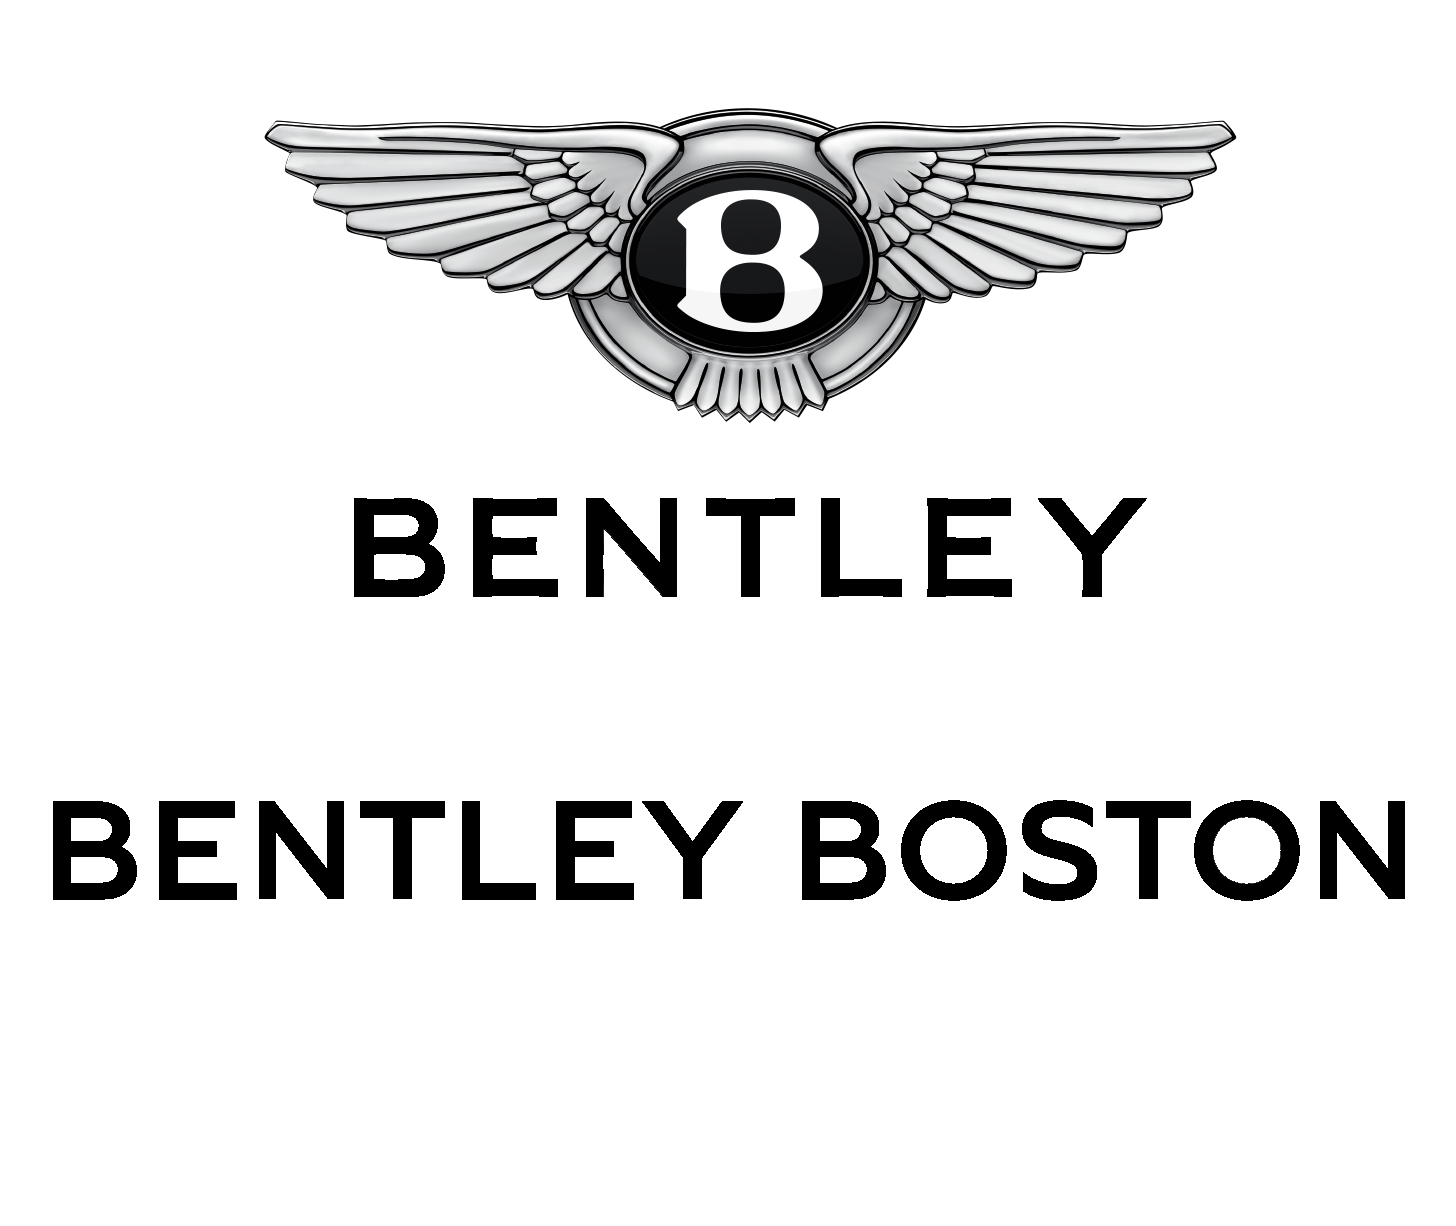 Bentley Boston